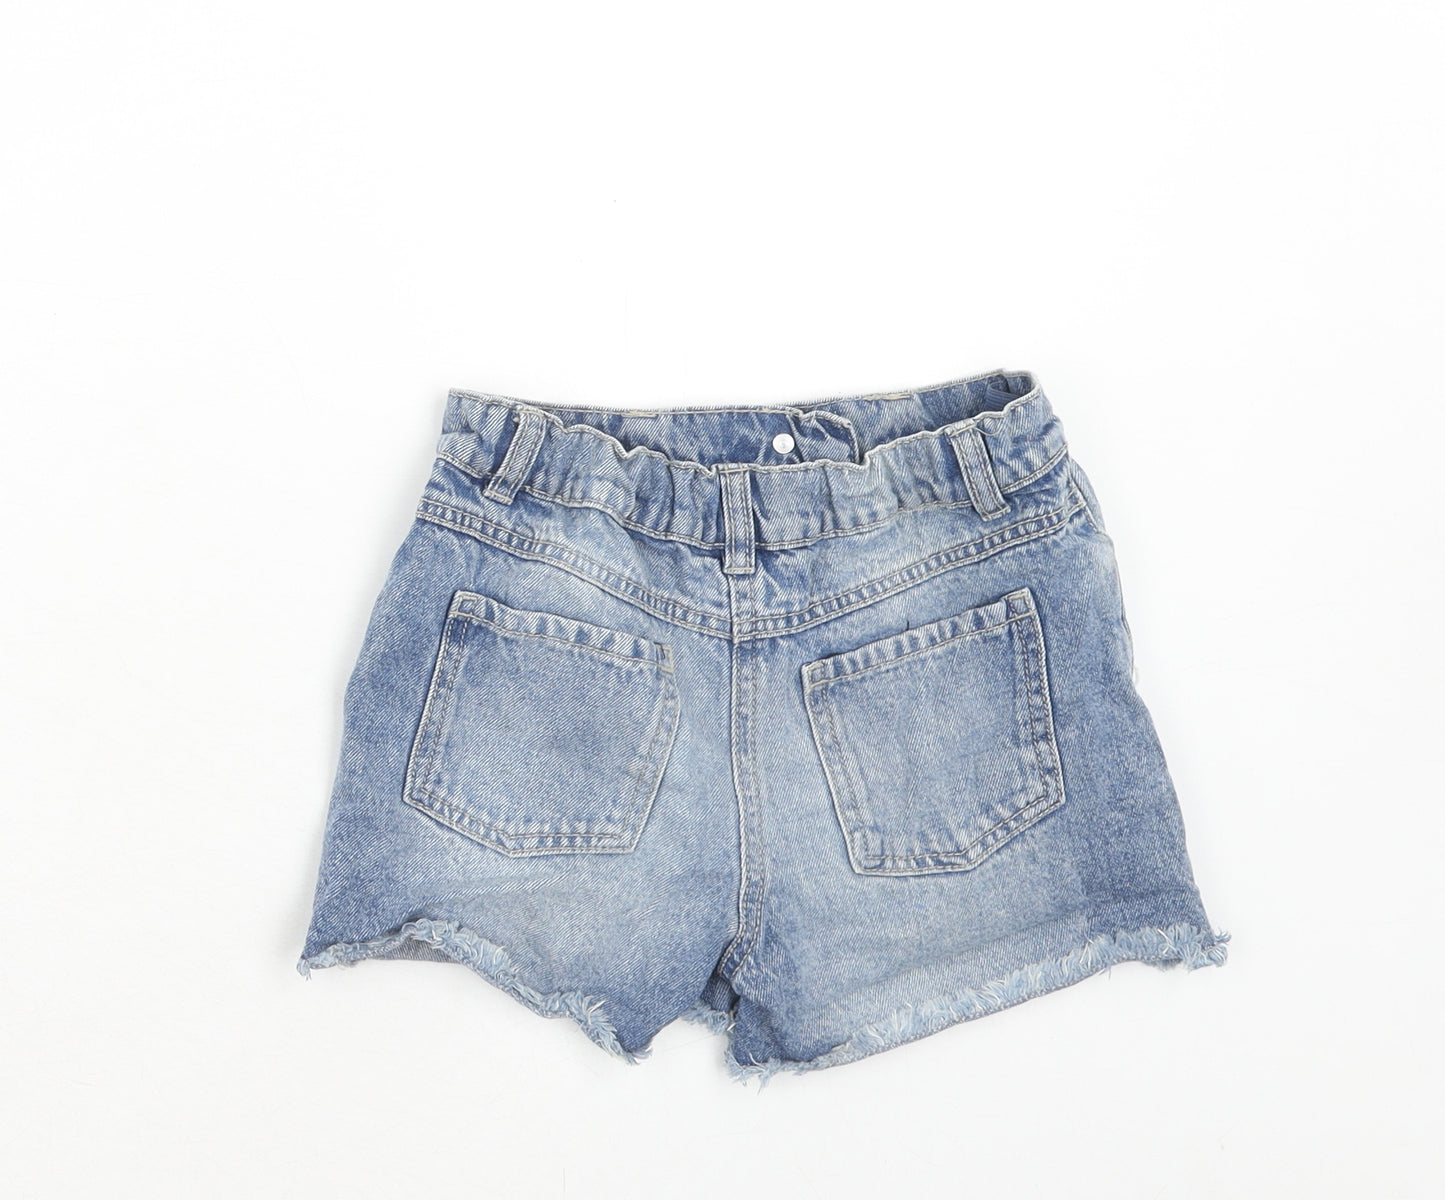 TU Girls Blue Cotton Cut-Off Shorts Size 8 Years Regular Zip